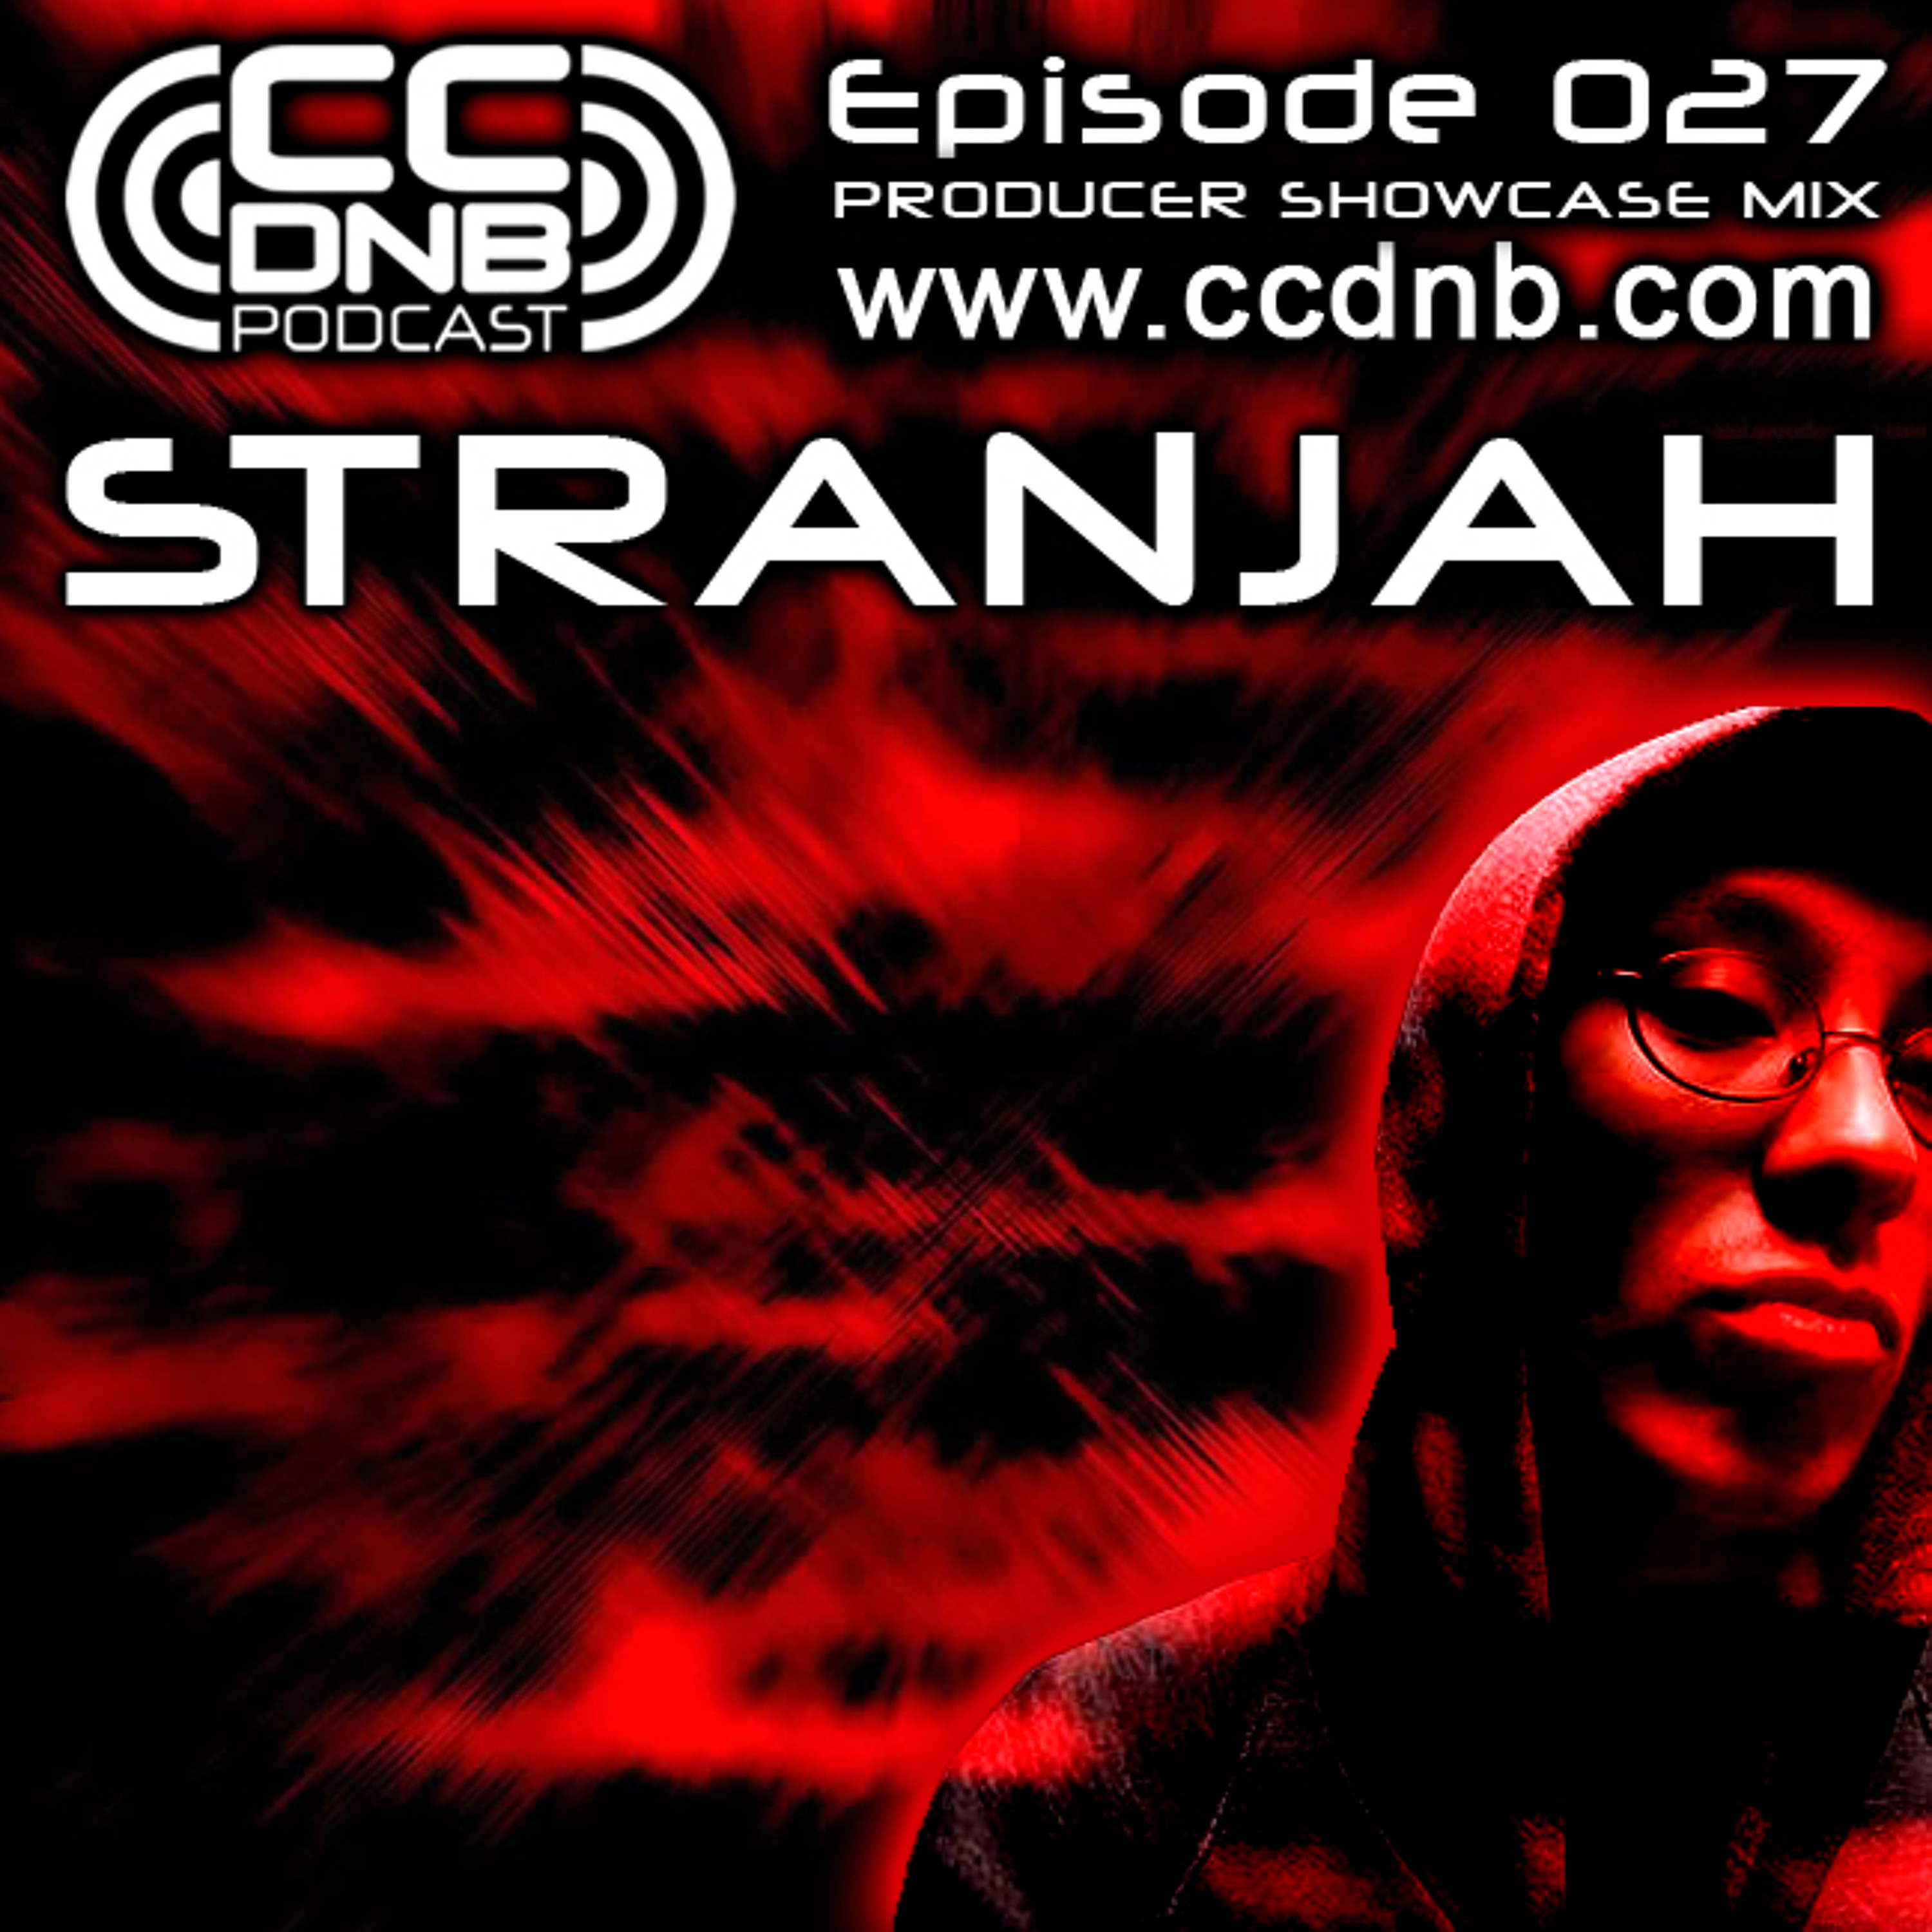 CCDNB 027 Producer Showcase Mix Featuring Stranjah